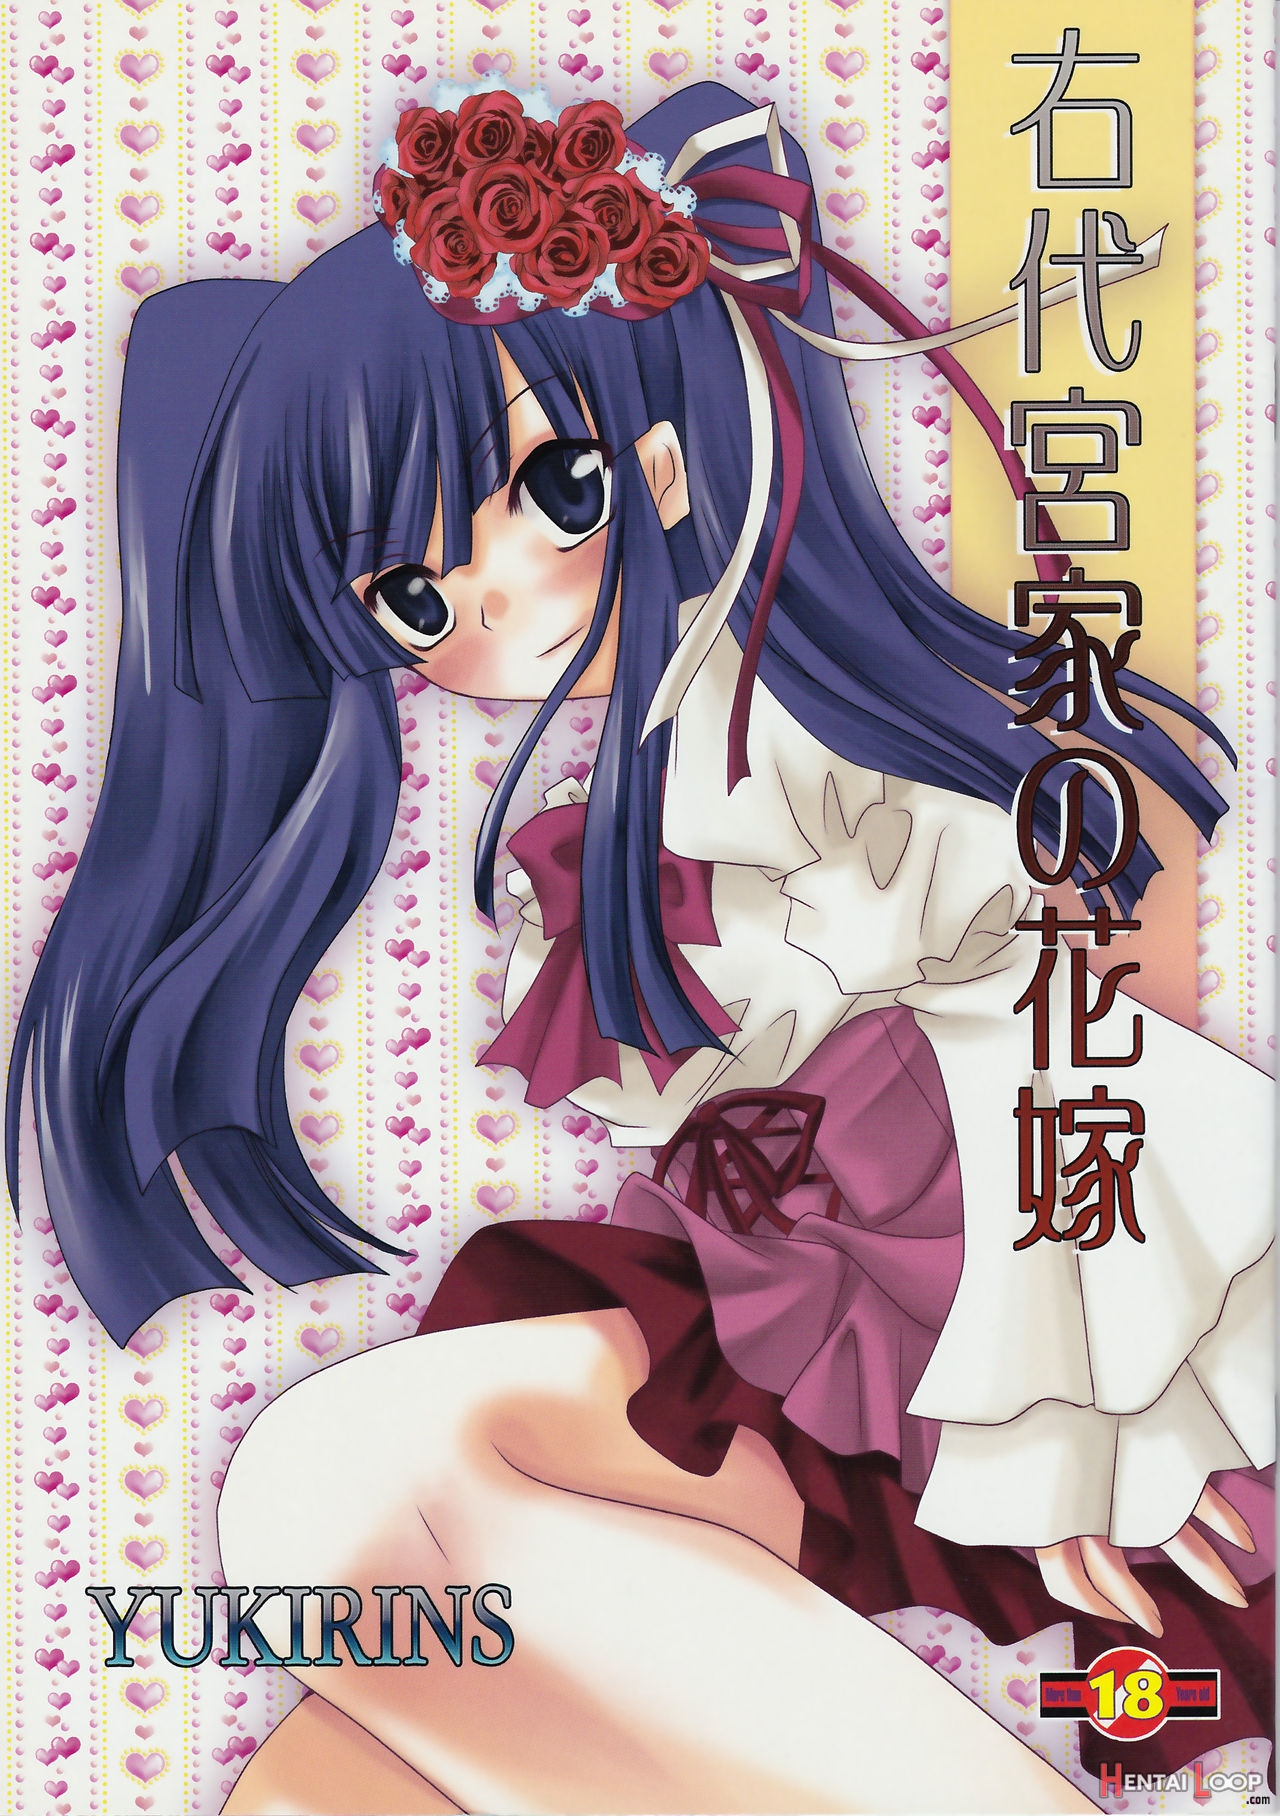 Ushiromiya Bride page 1